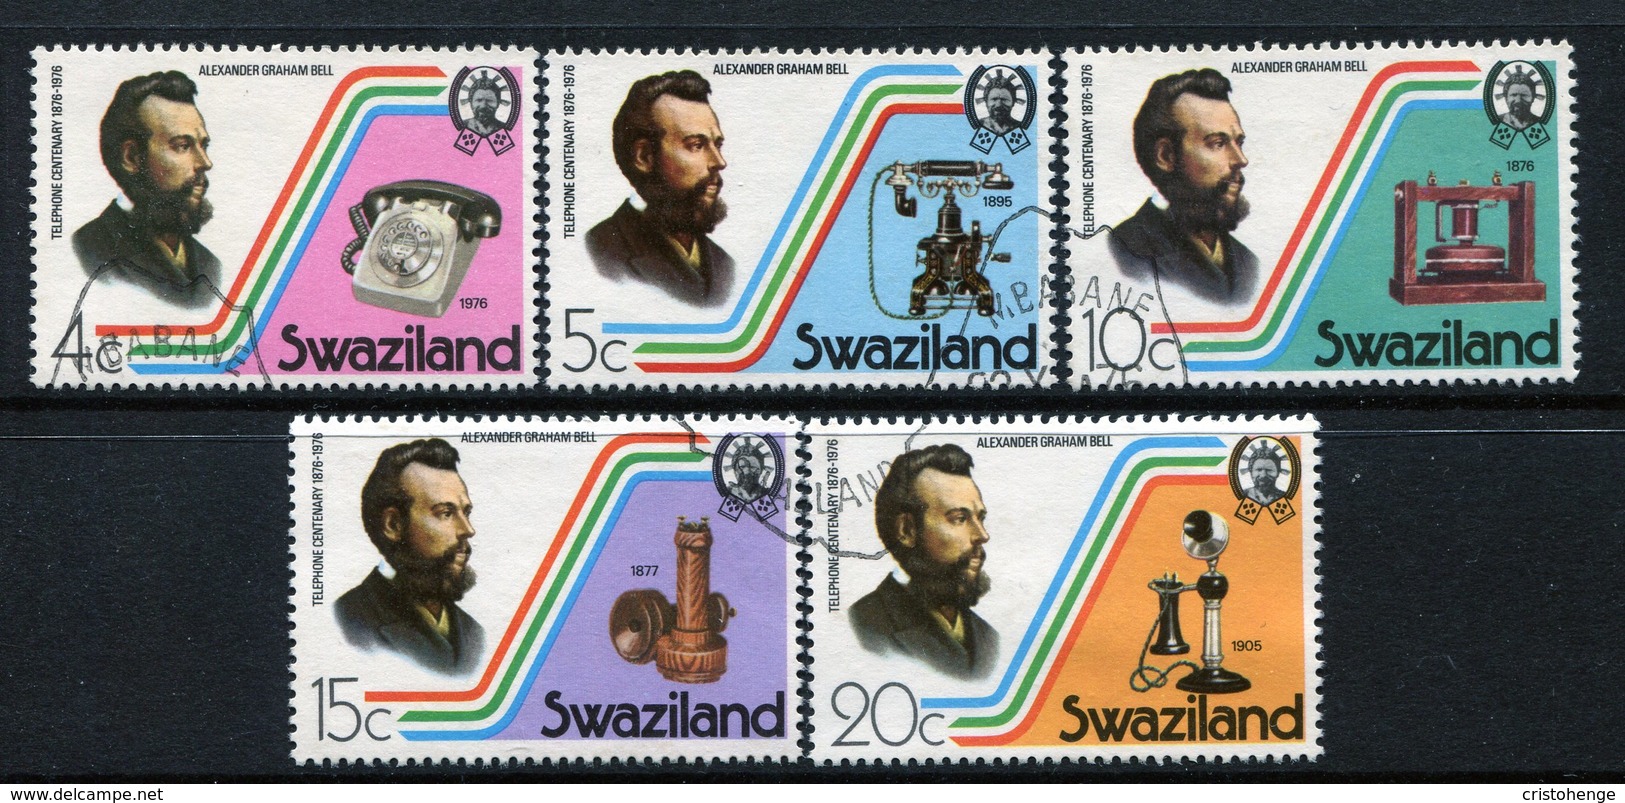 Swaziland 1976 Telephone Centenary Set Used (SG 263-267) - Swaziland (1968-...)